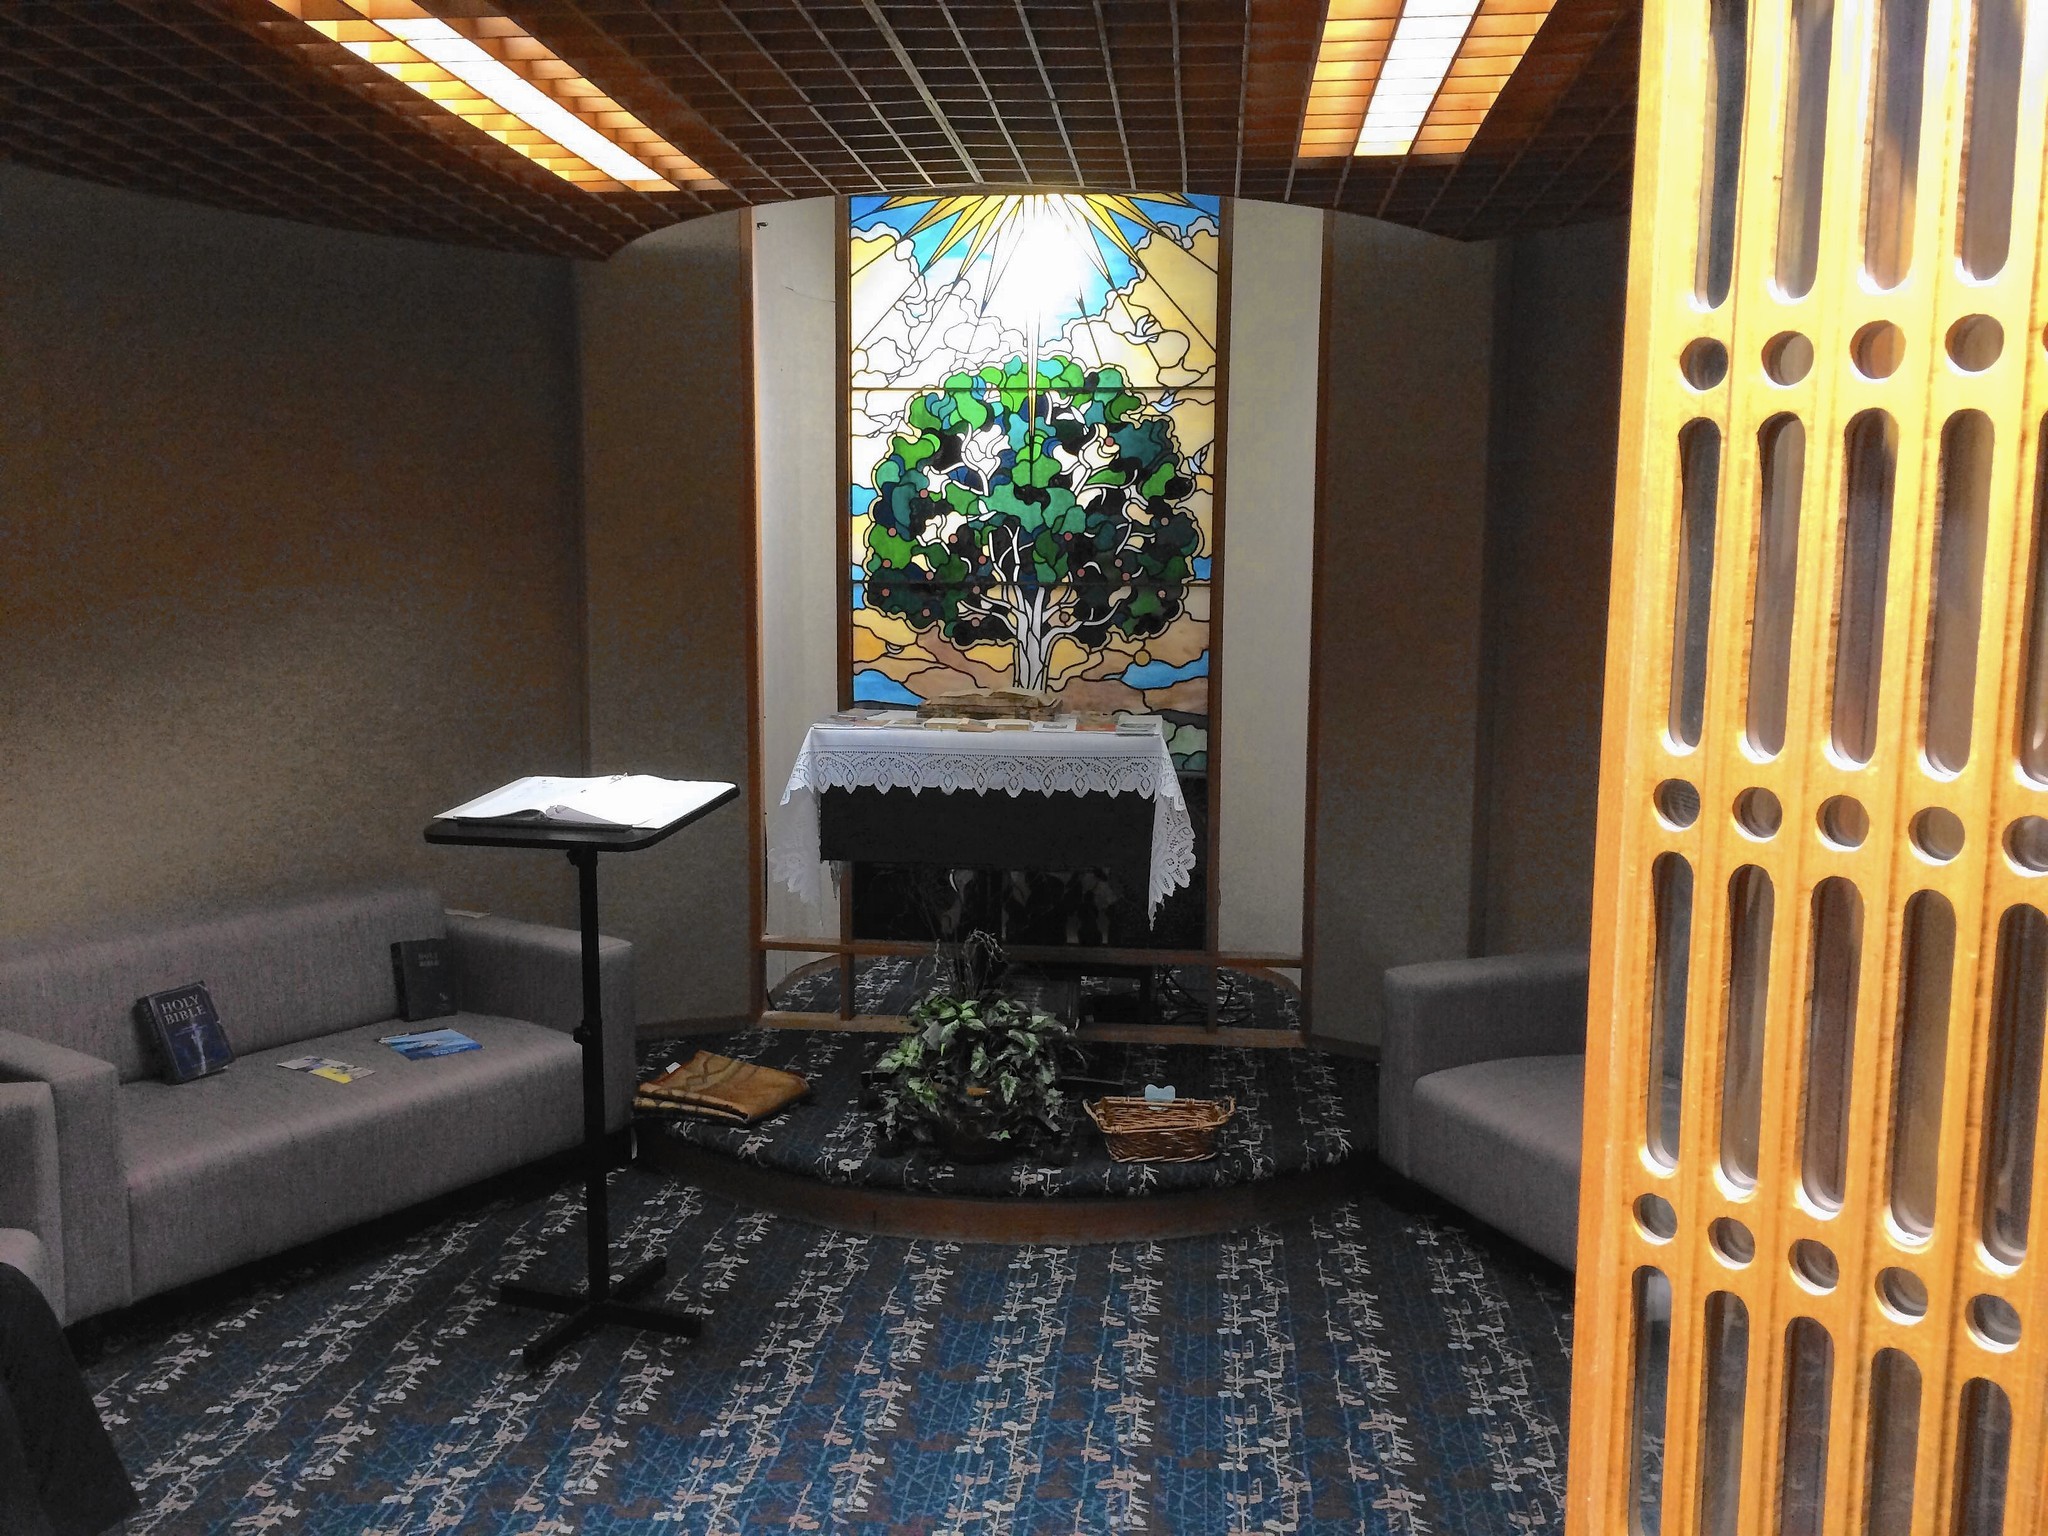 Orlando International opening reflection room for Muslim travelers - Orlando Sentinel2048 x 1536